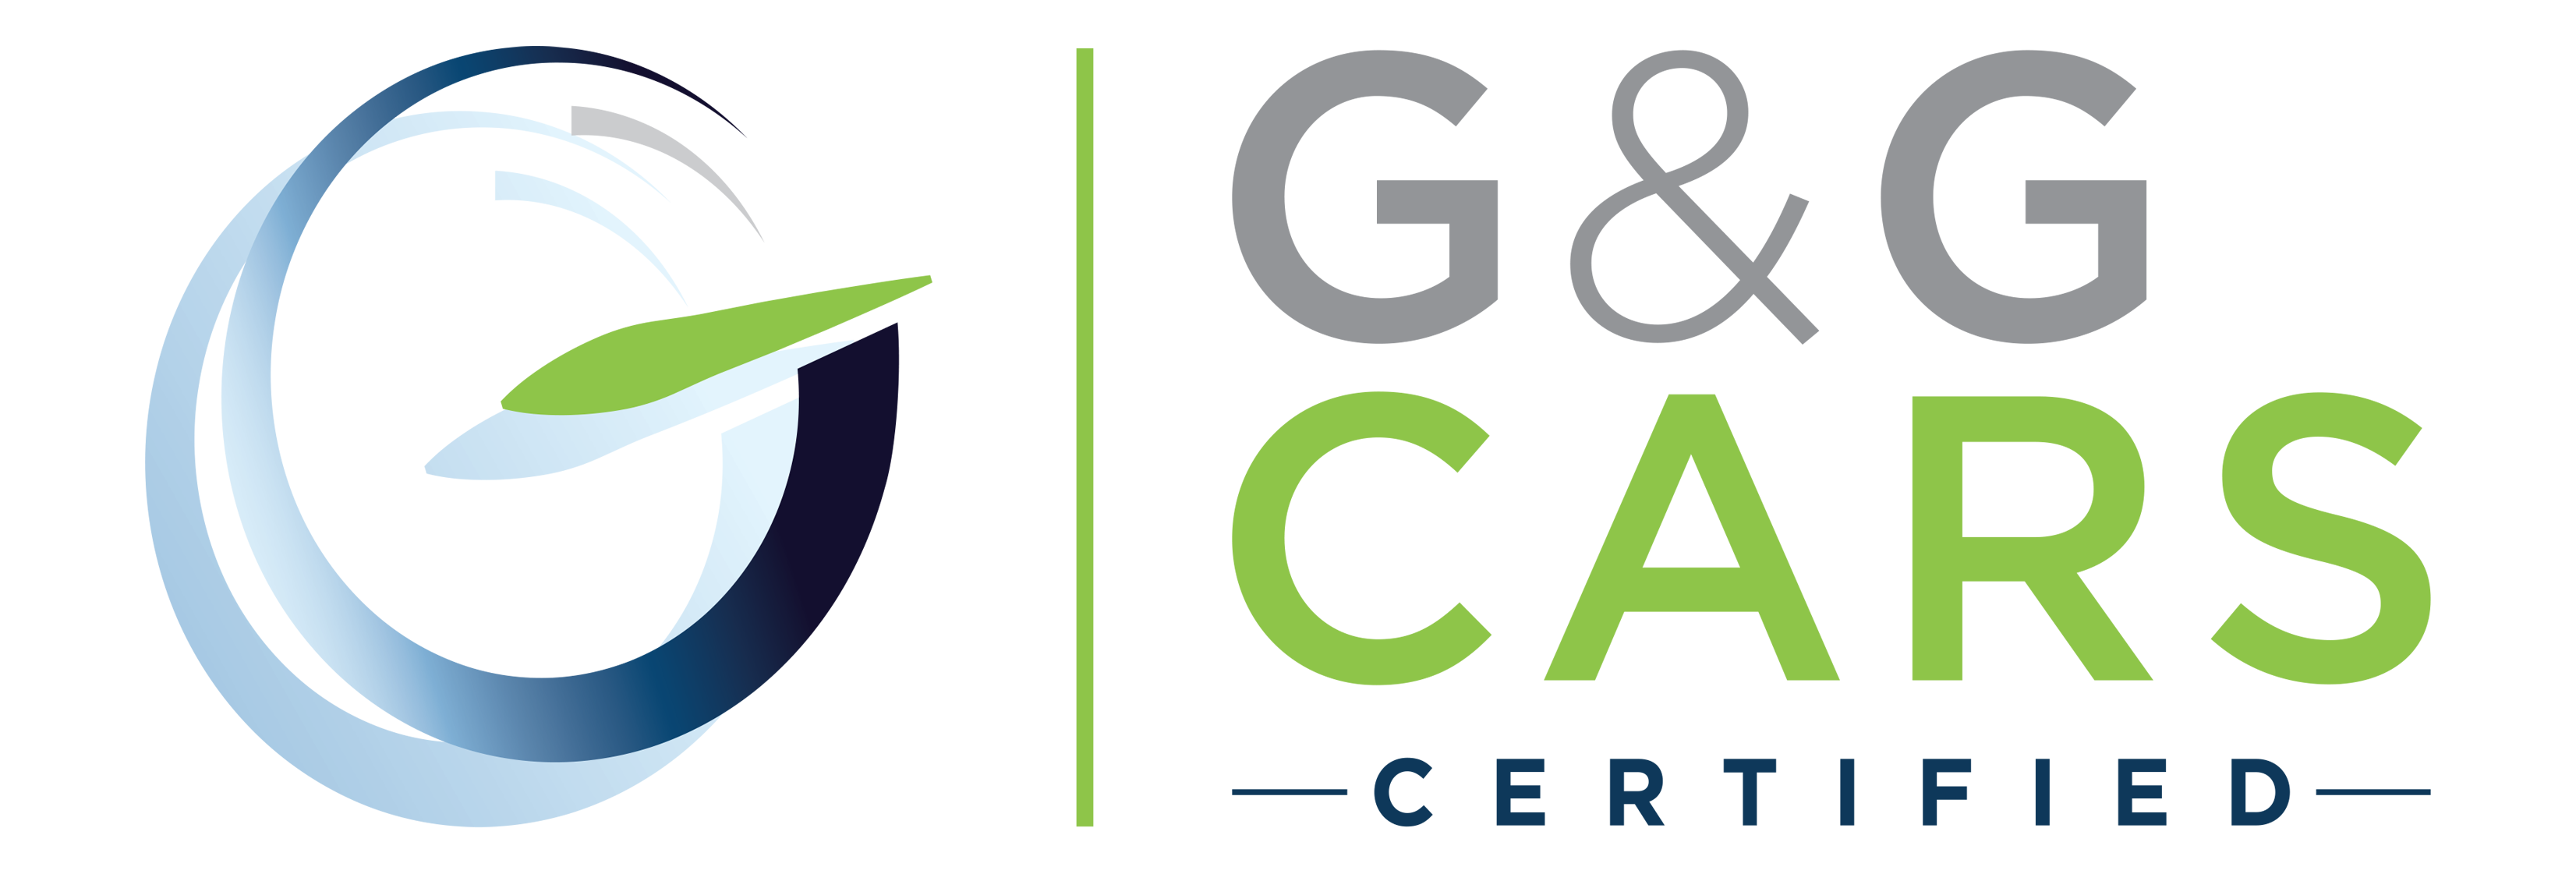 logo G&G Cars Waremme (By Schyns - Citropol)